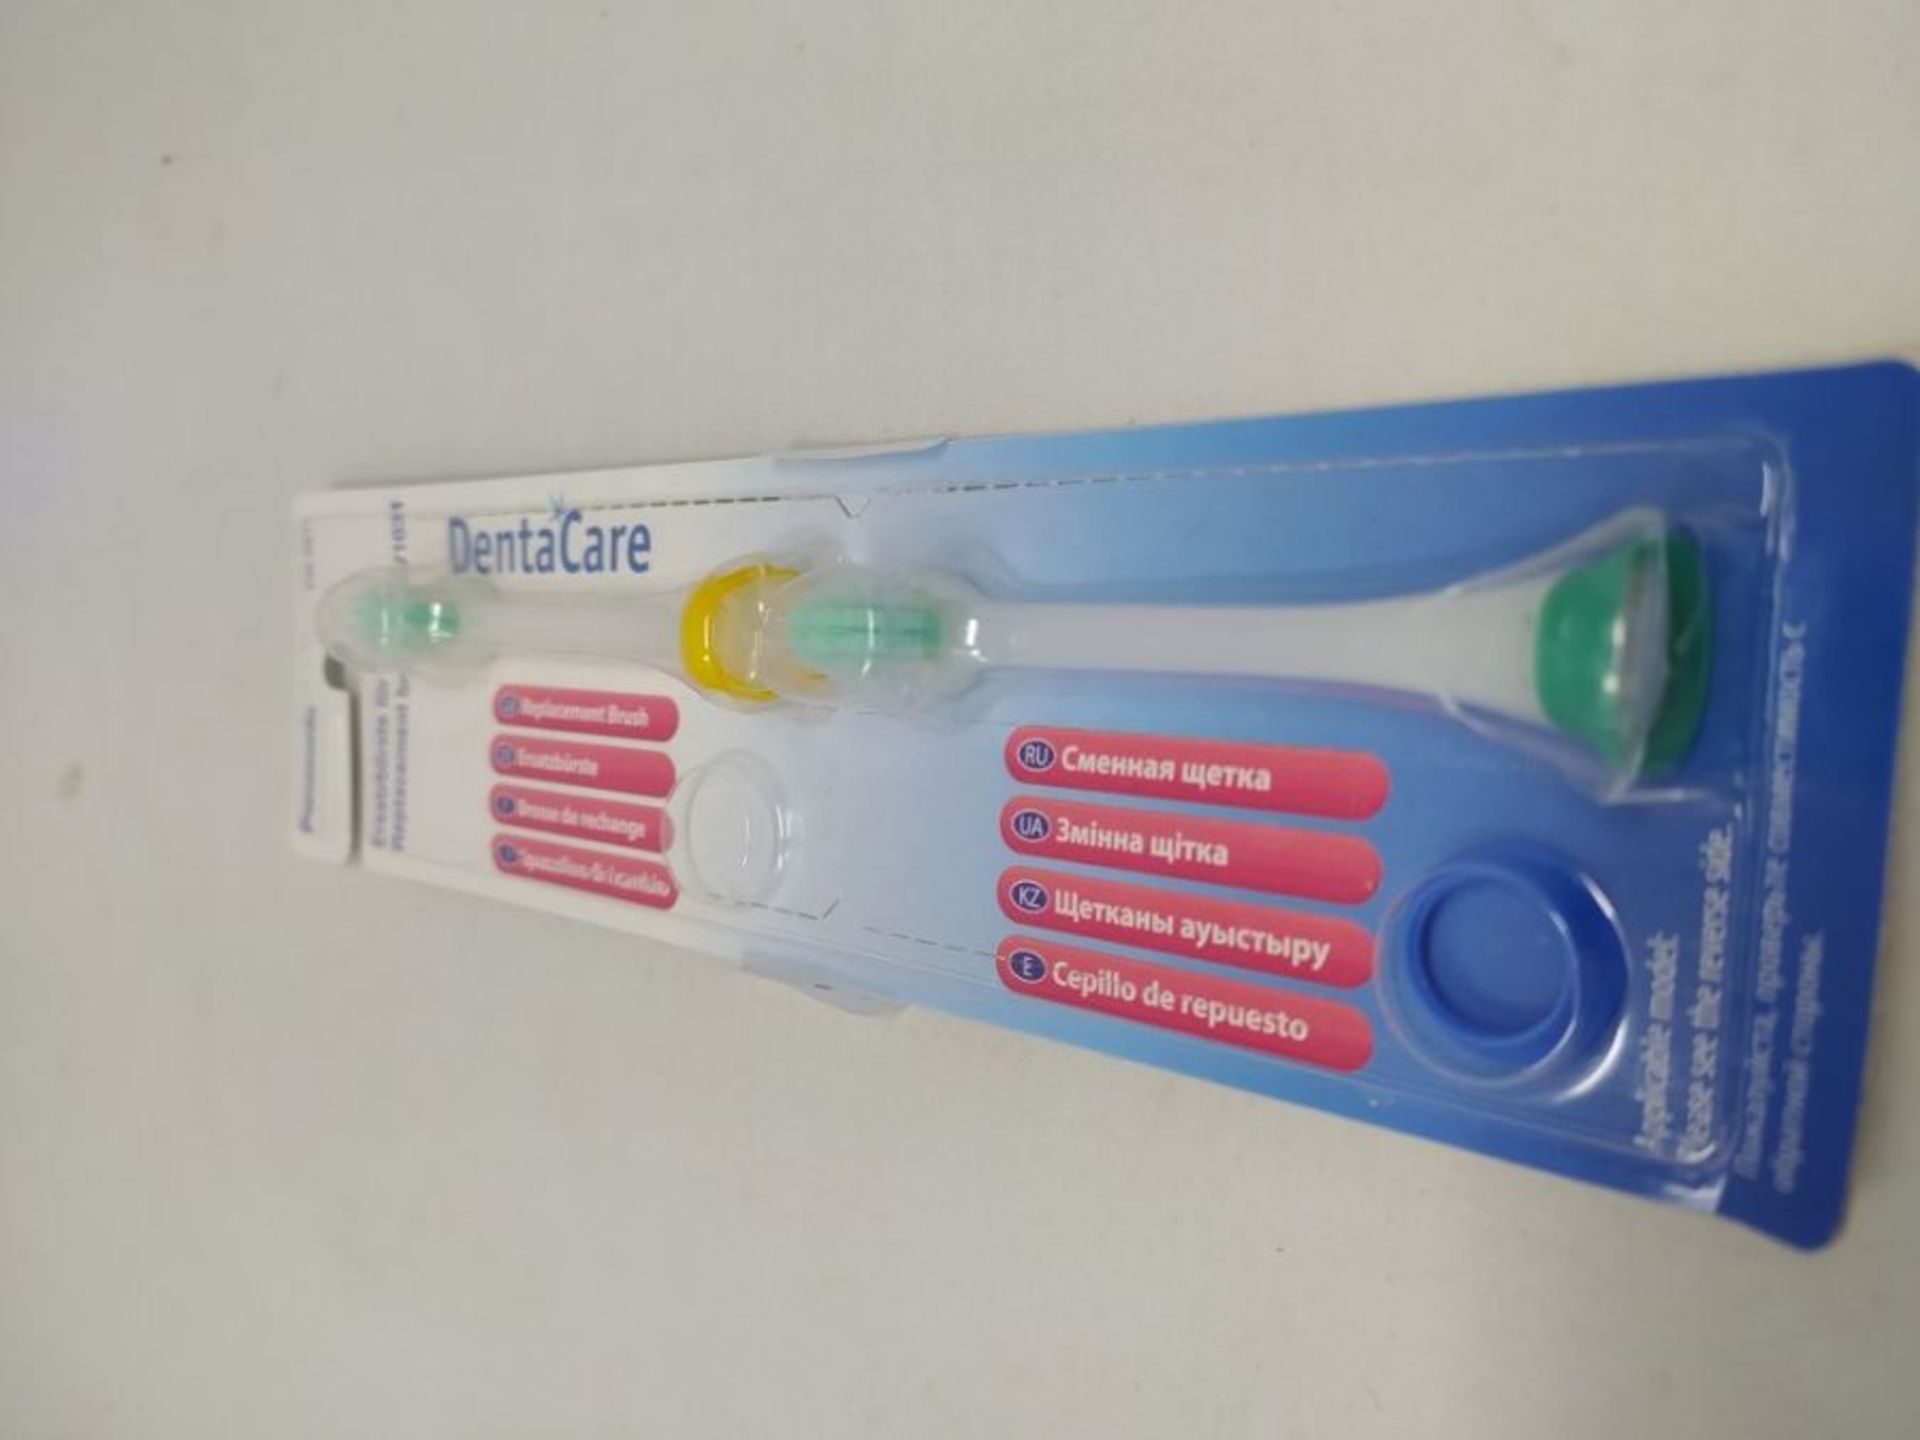 Panasonic Dentacare Sonodent EW0911 Toothbrush Heads (x2) - Image 2 of 2